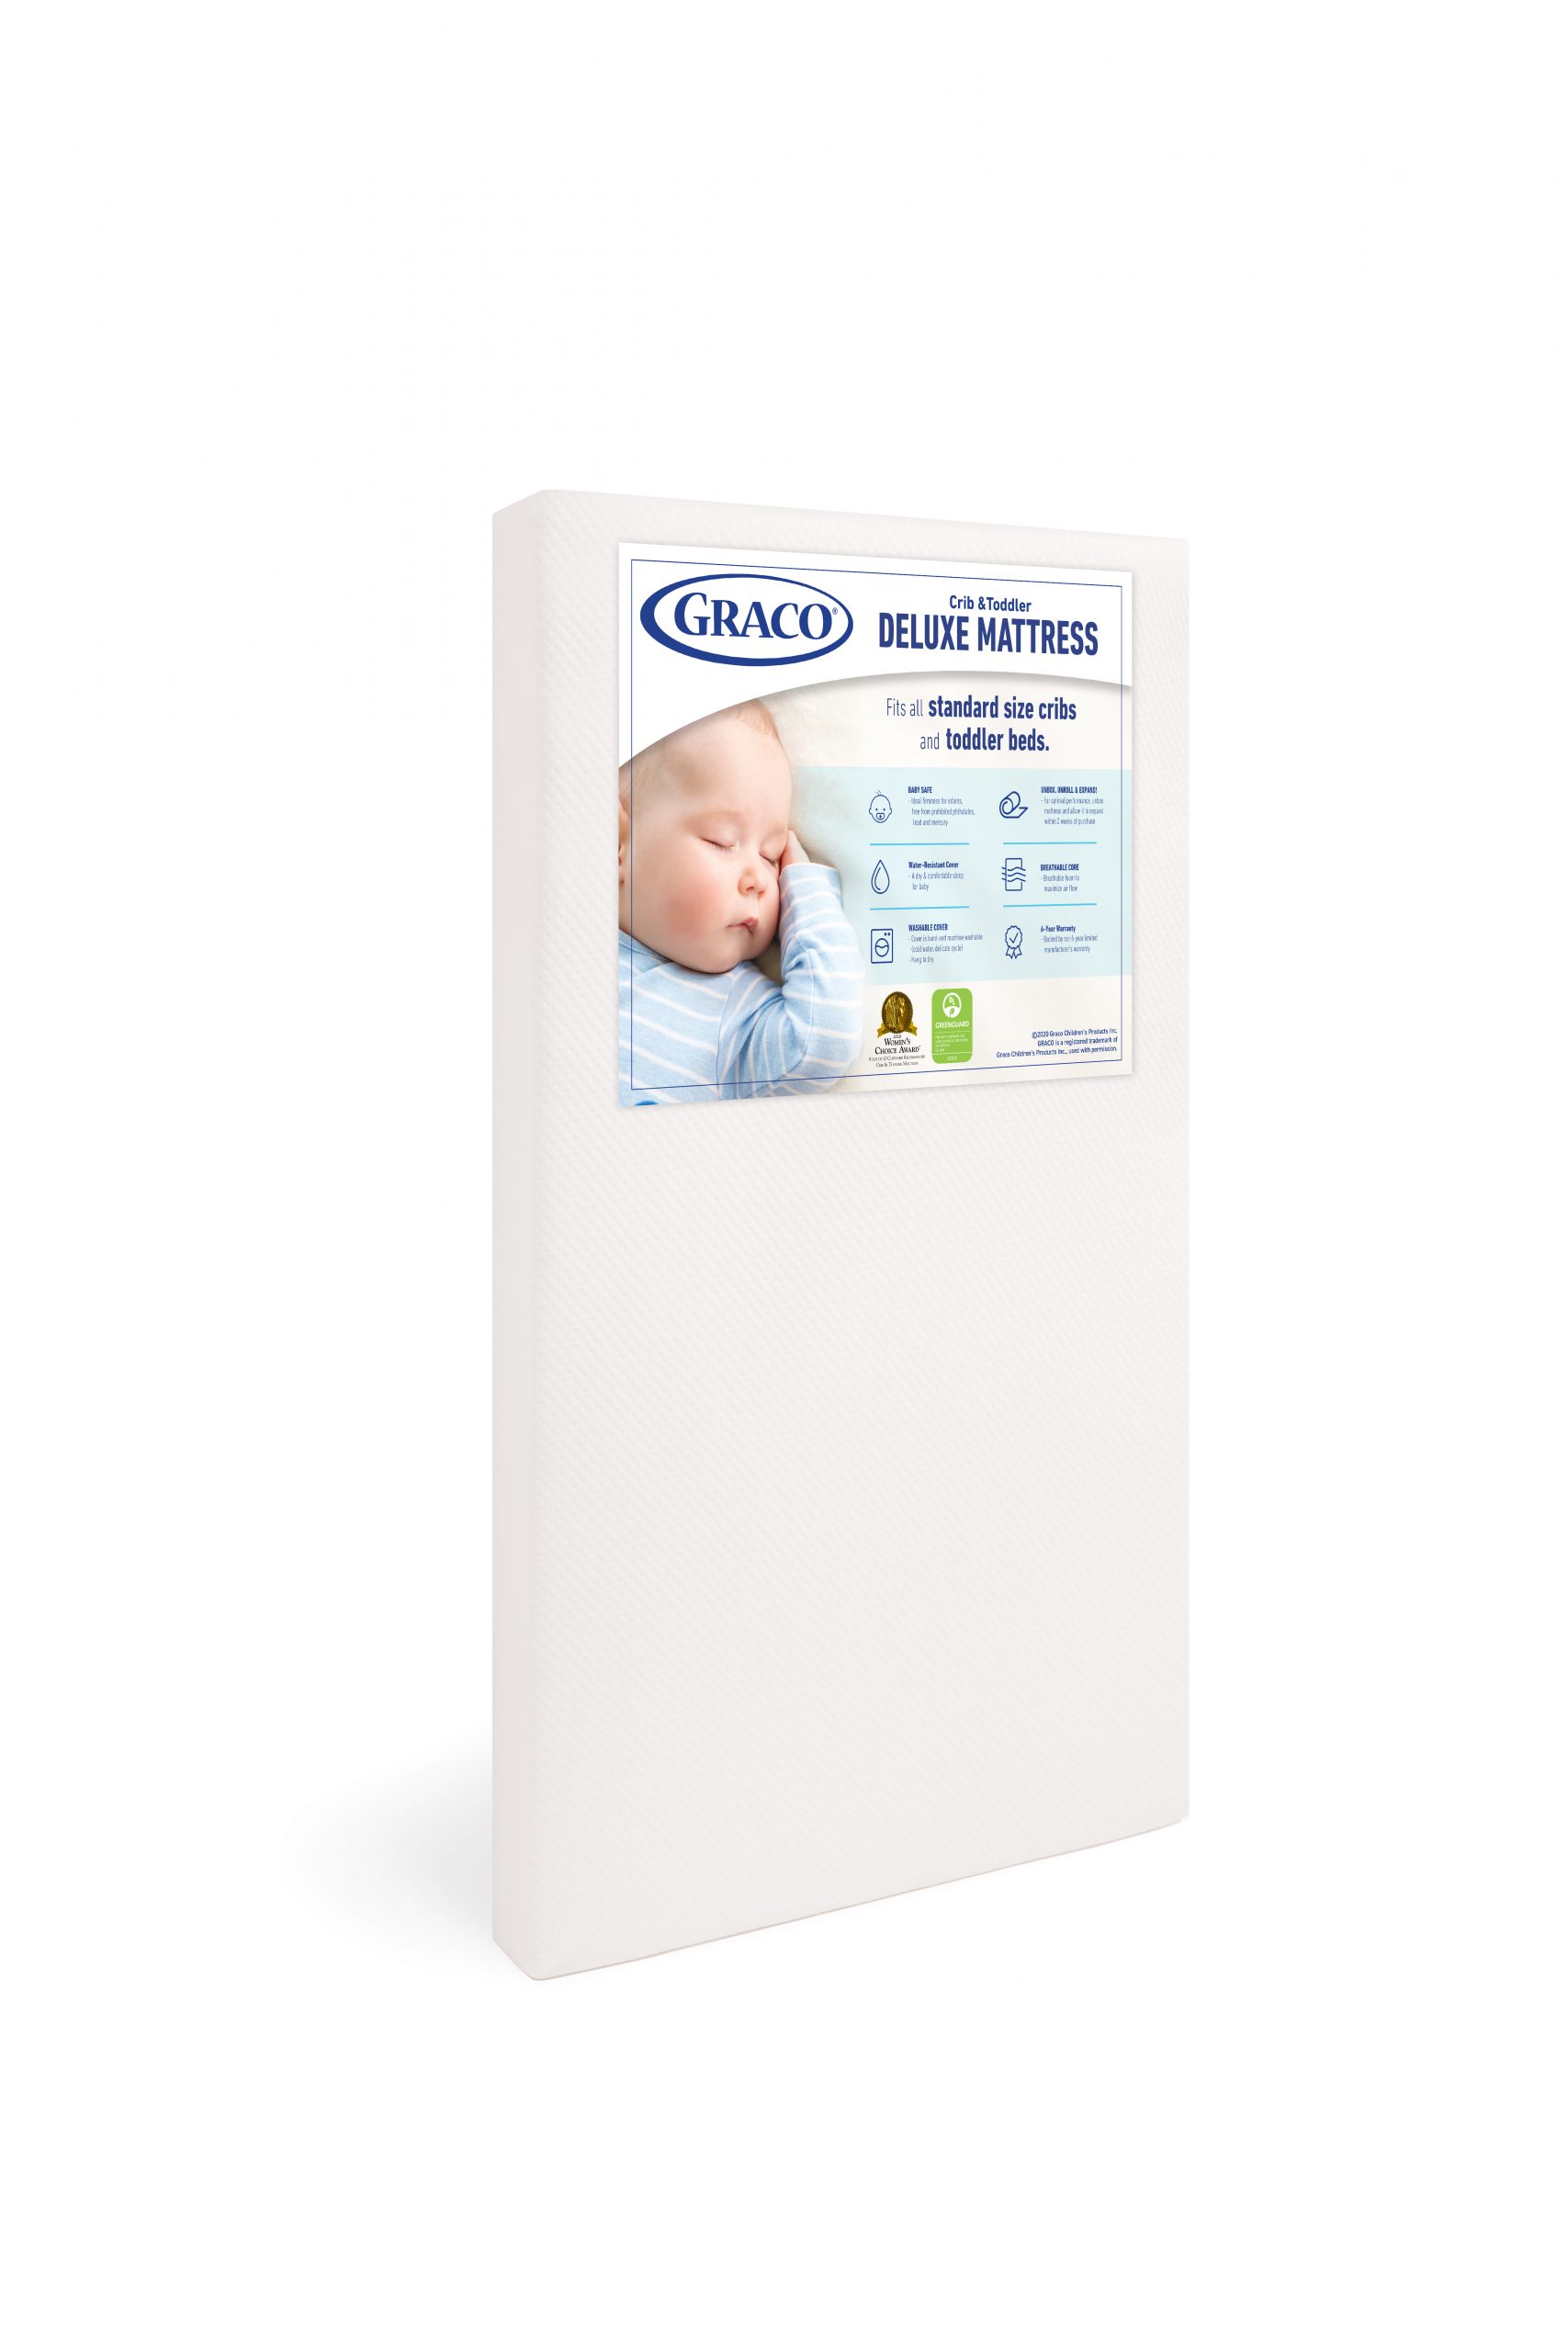 Graco Premium Foam Crib and Toddler Mattress